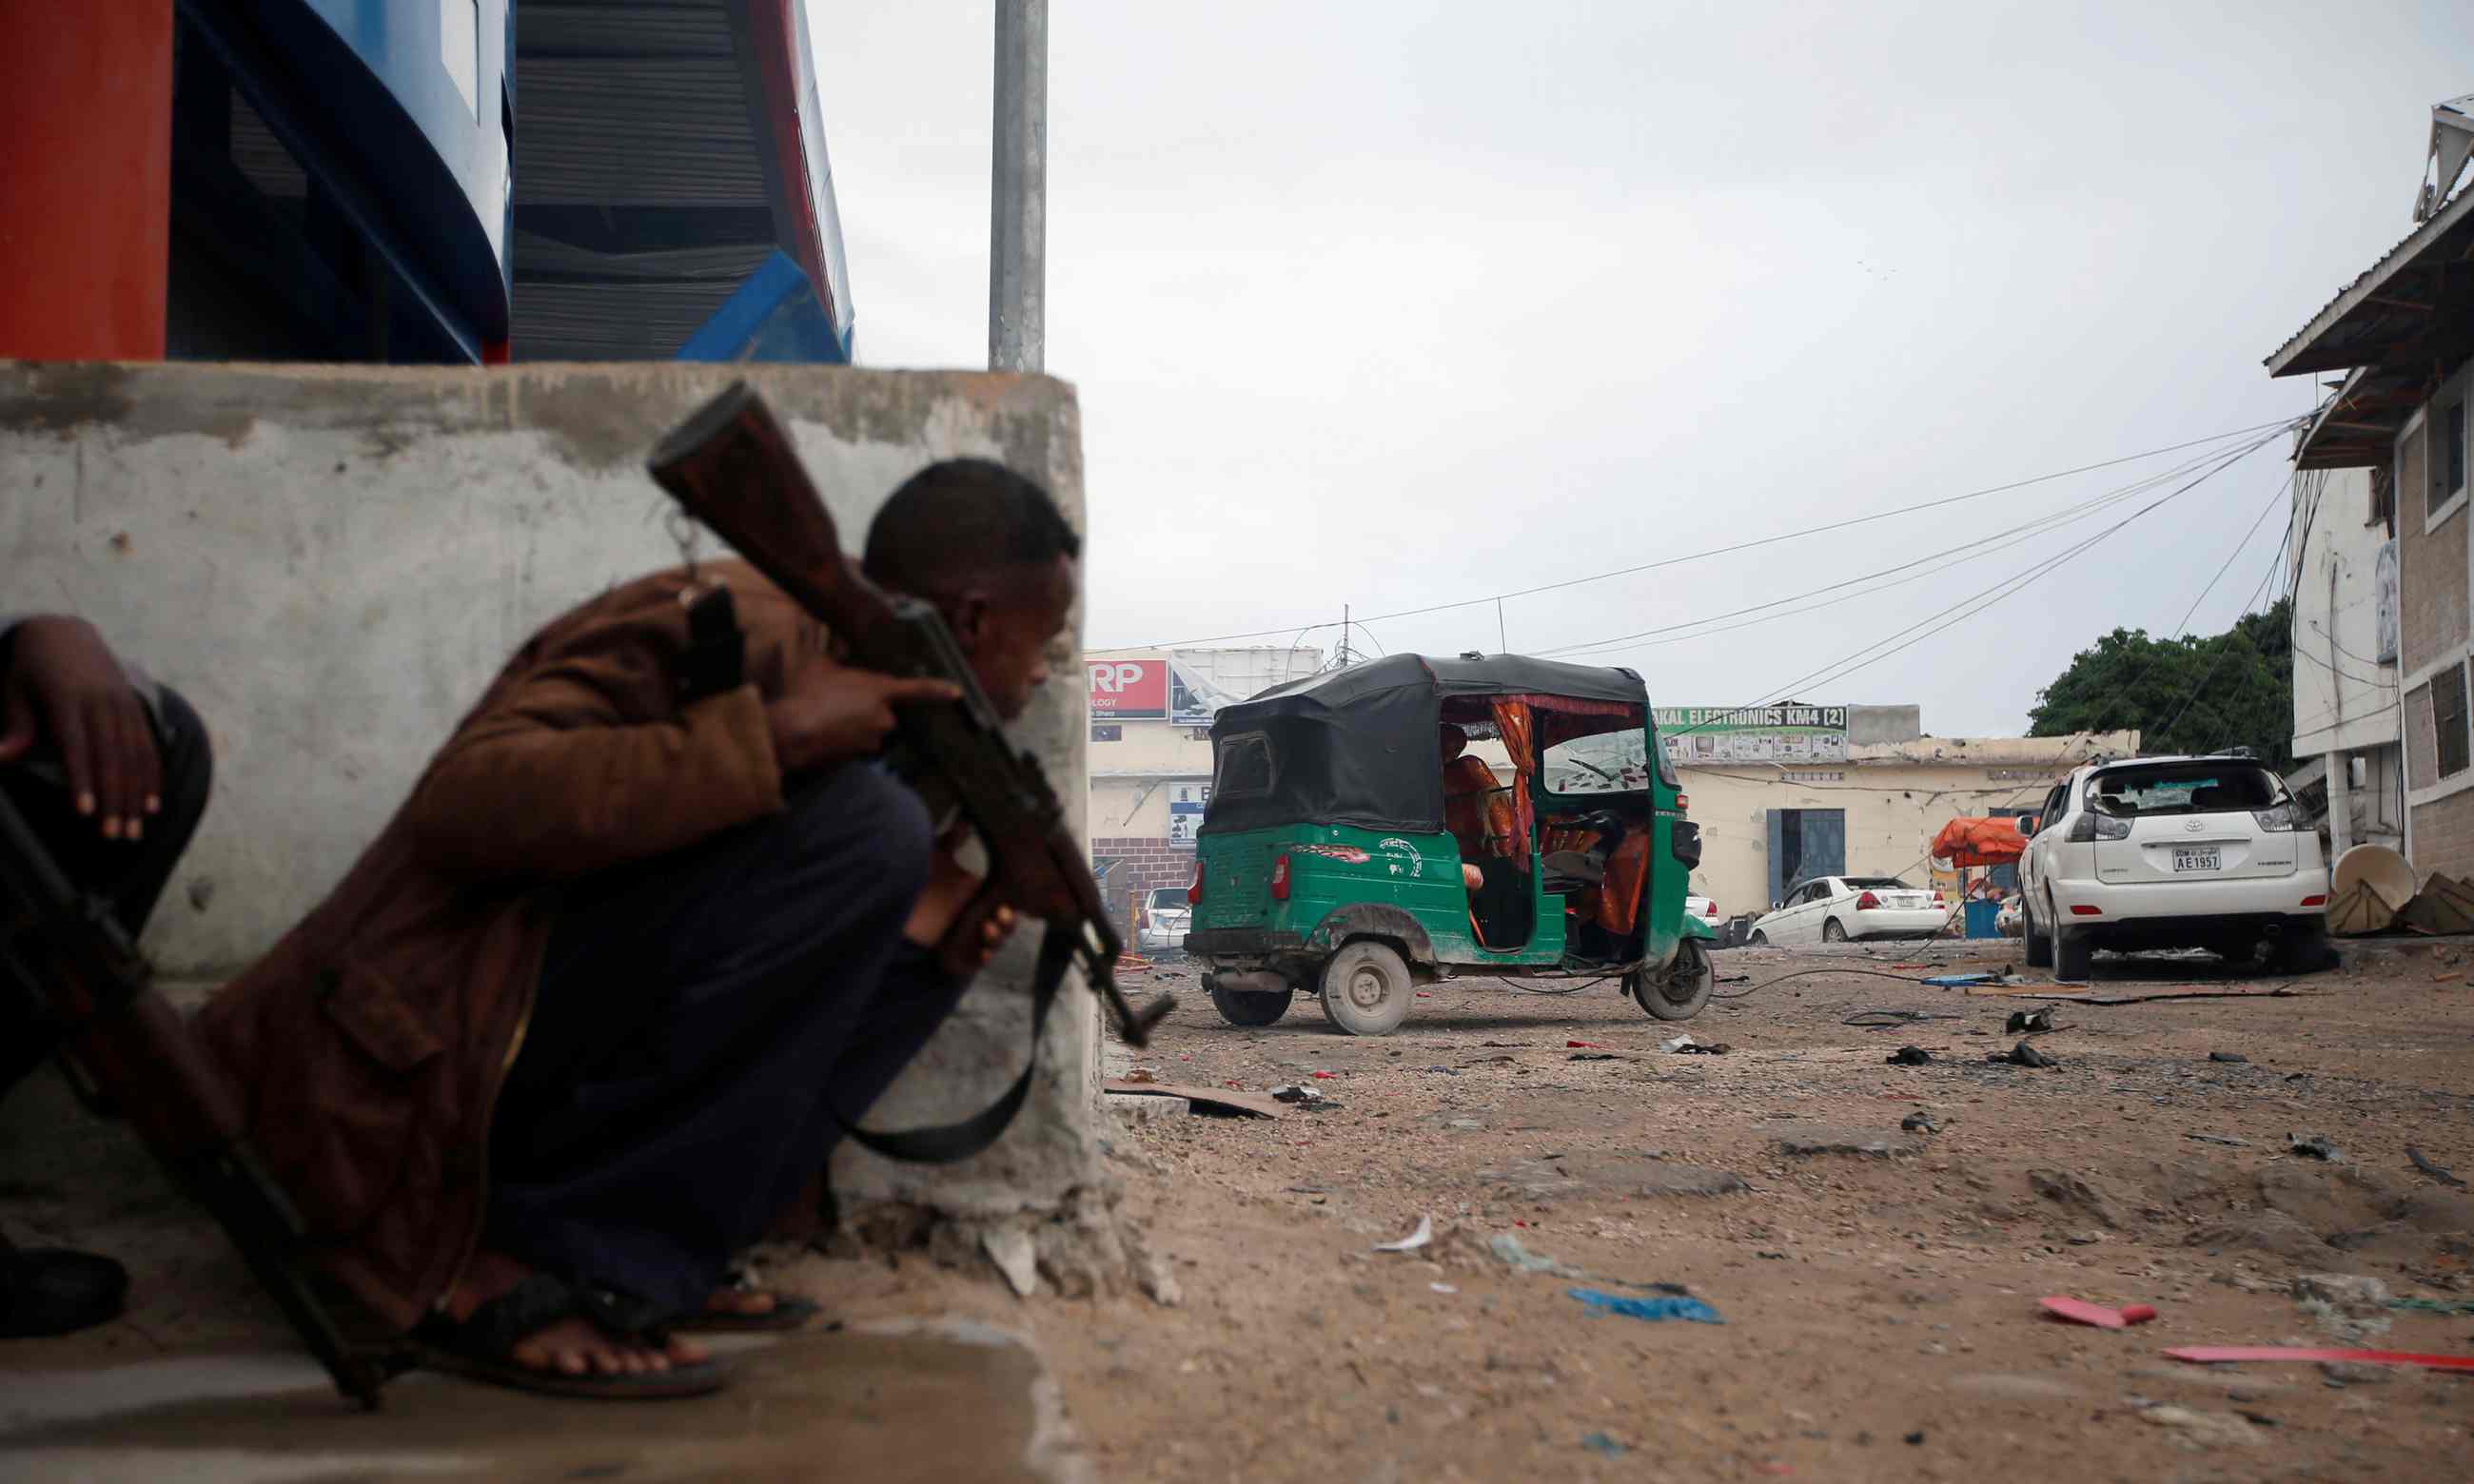 Foreign troops in Somalia struggle to keep al-Shabaab at bay